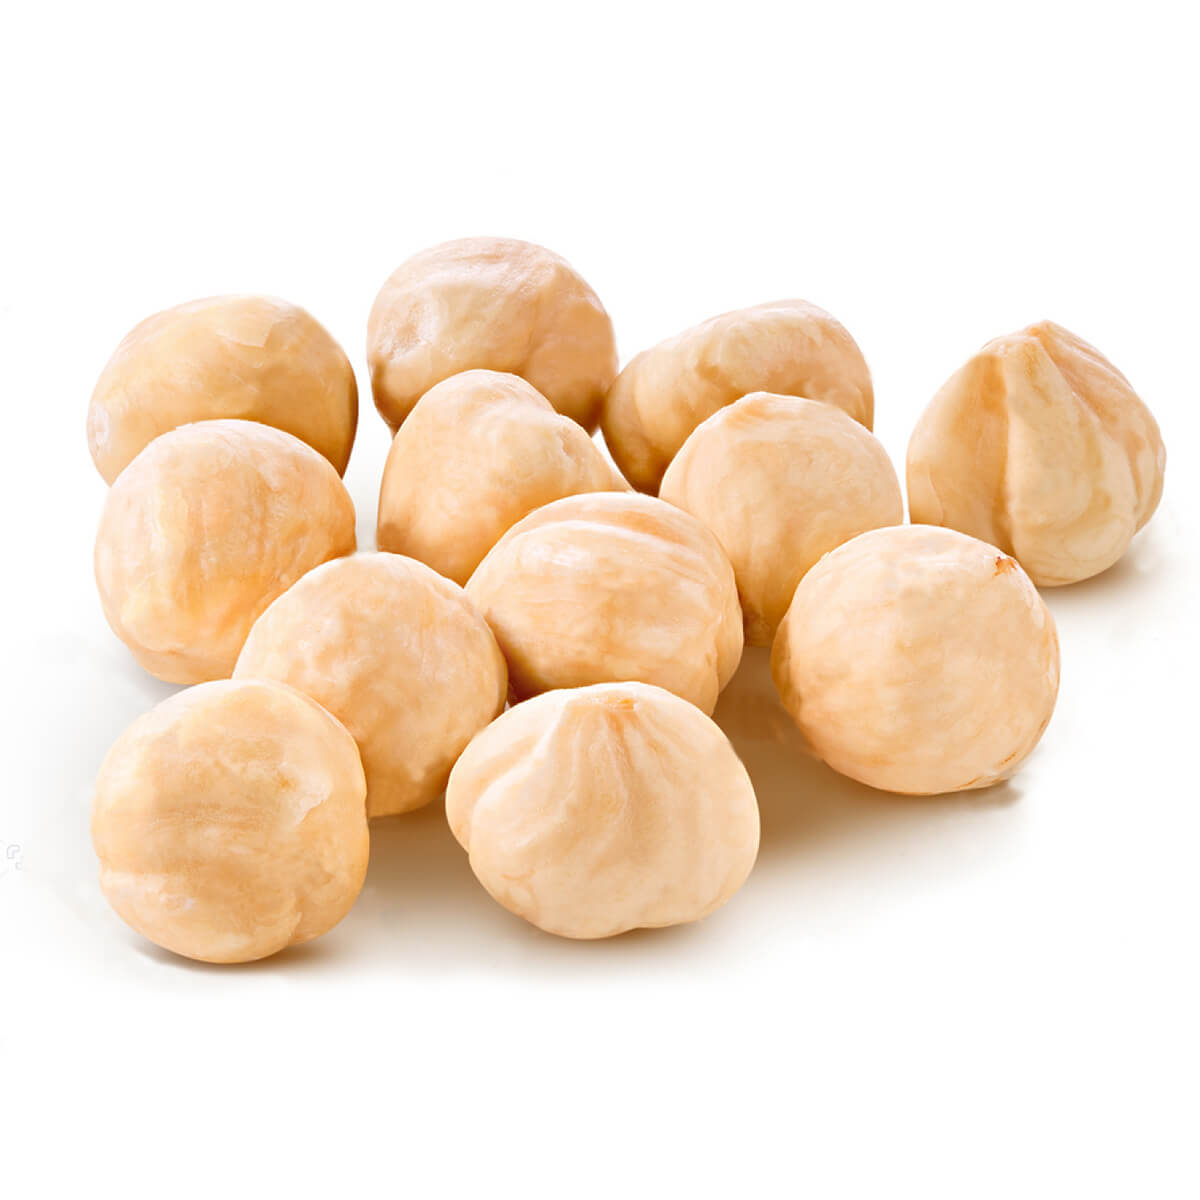 Turkish Hazelnuts.